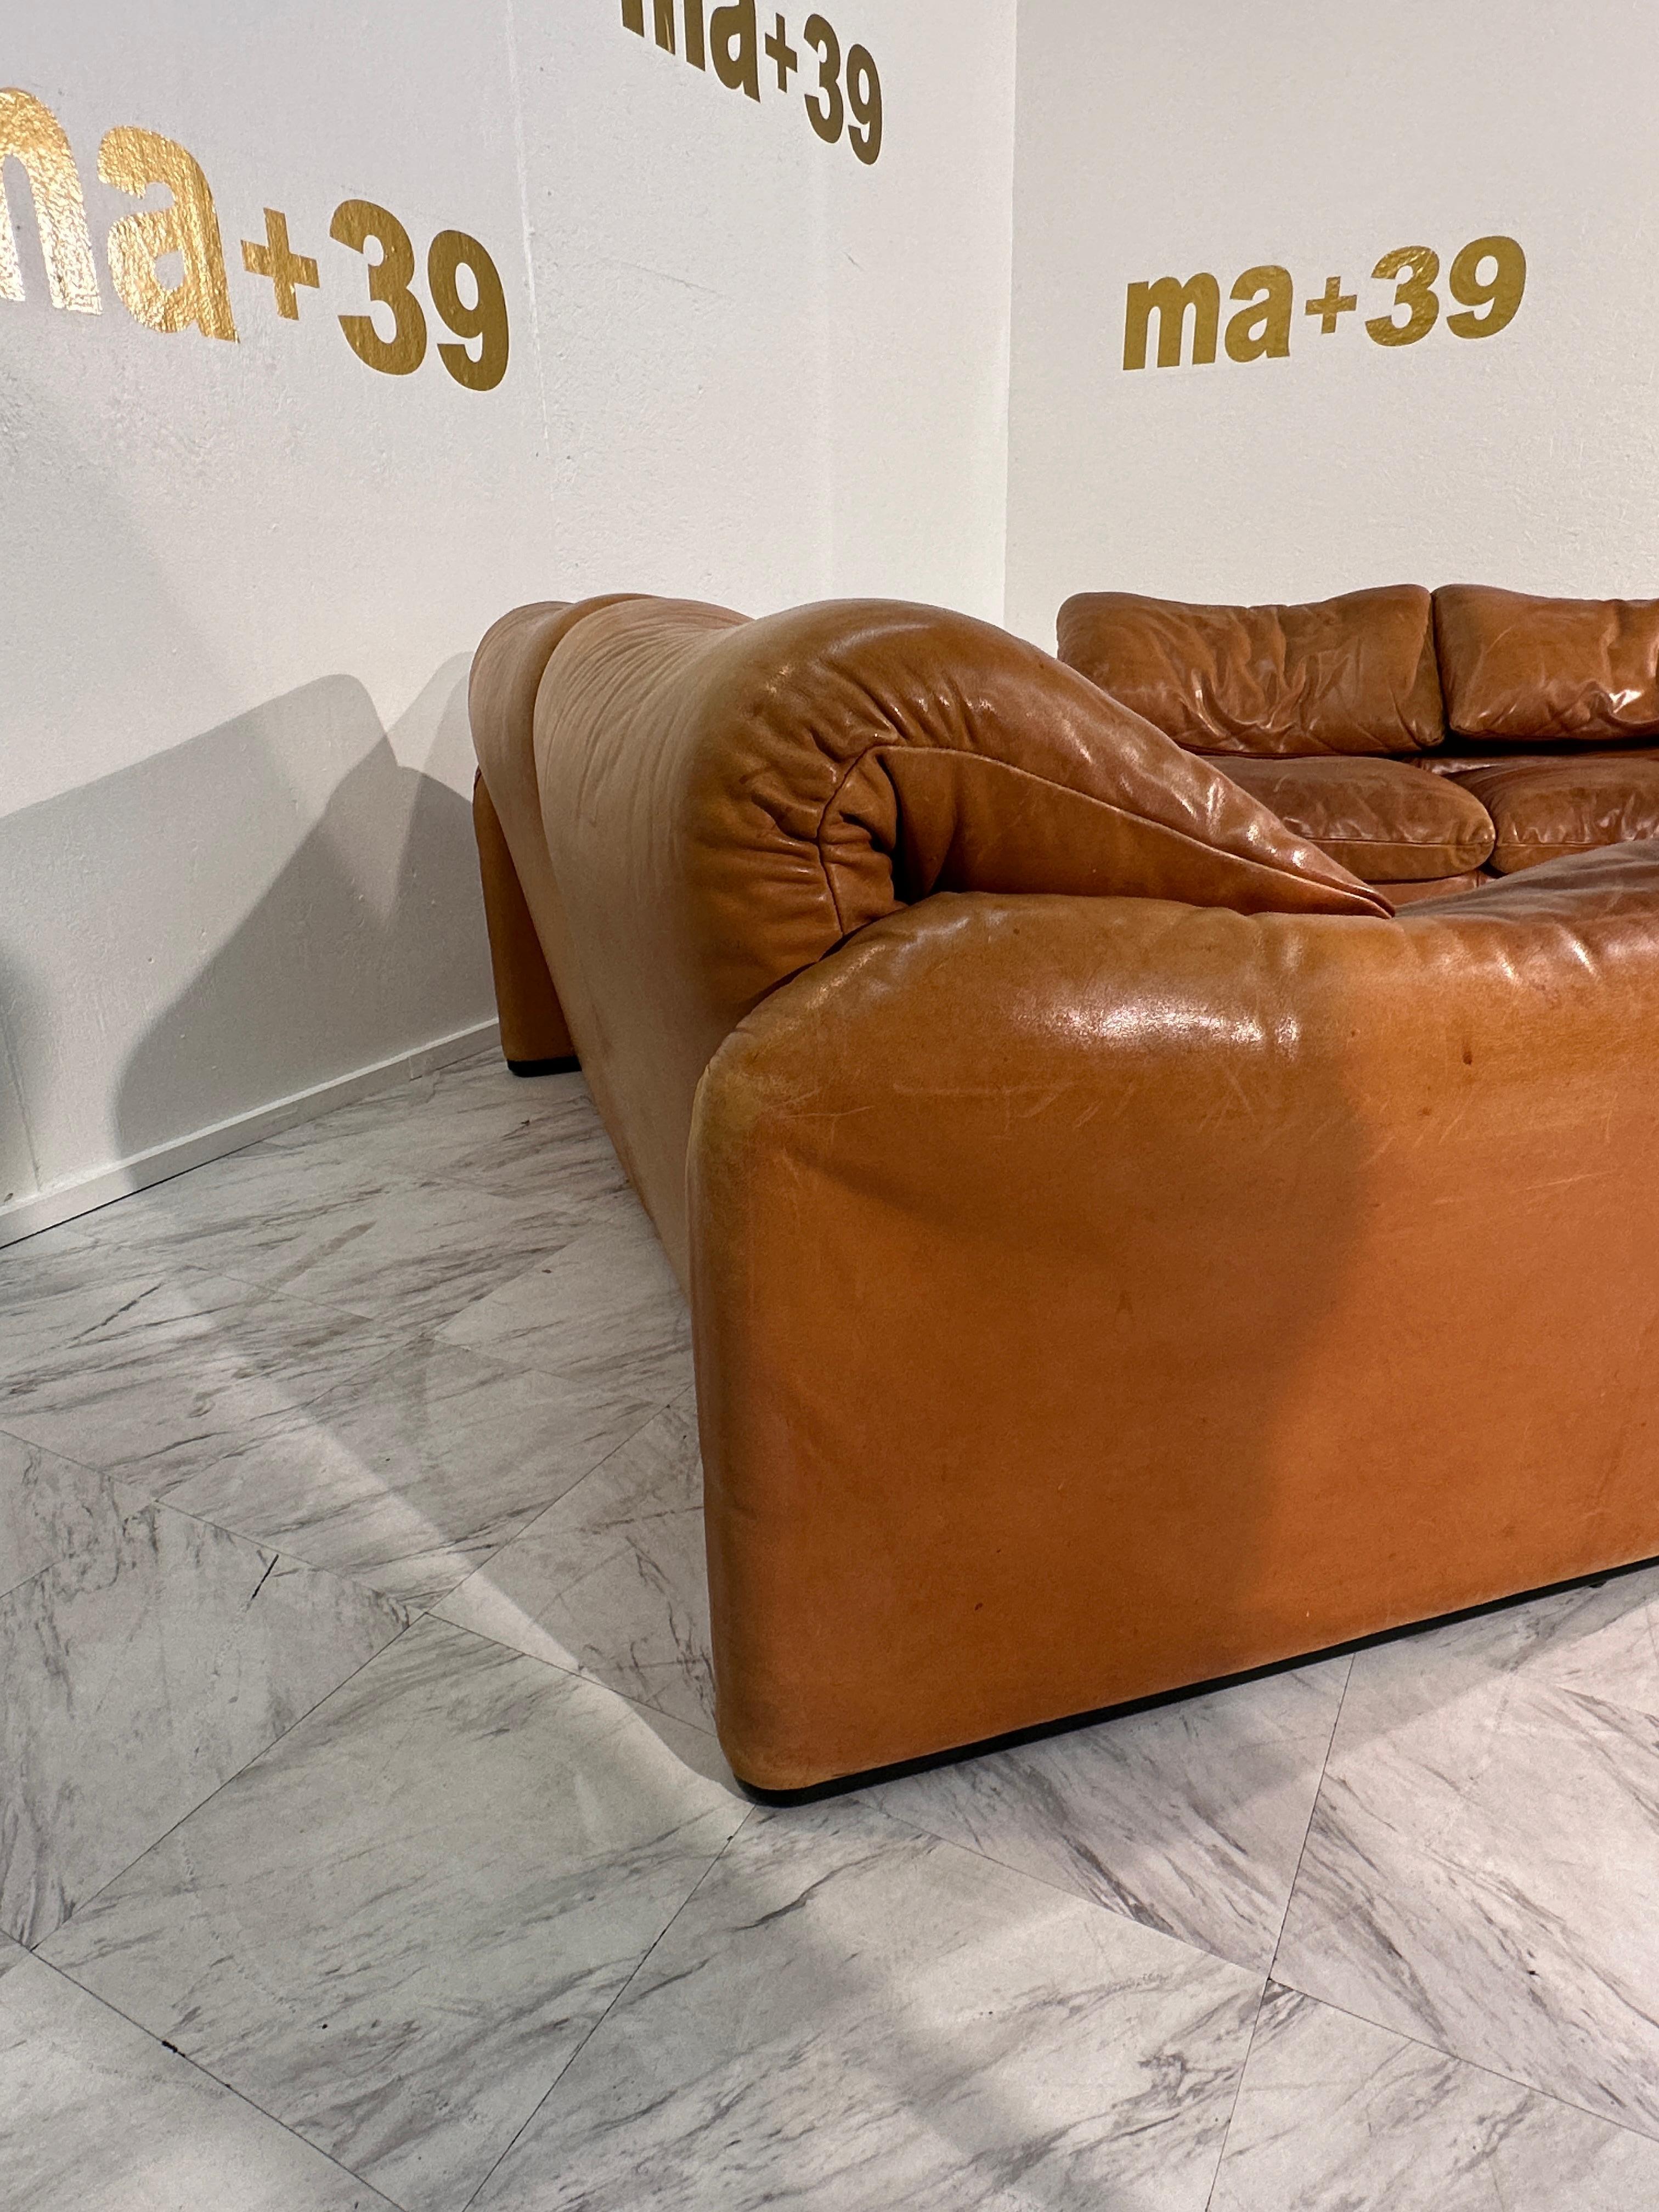 Vico Magistretti Maralunga Leder-Sofa von Cassina, 1975 (Moderne der Mitte des Jahrhunderts) im Angebot